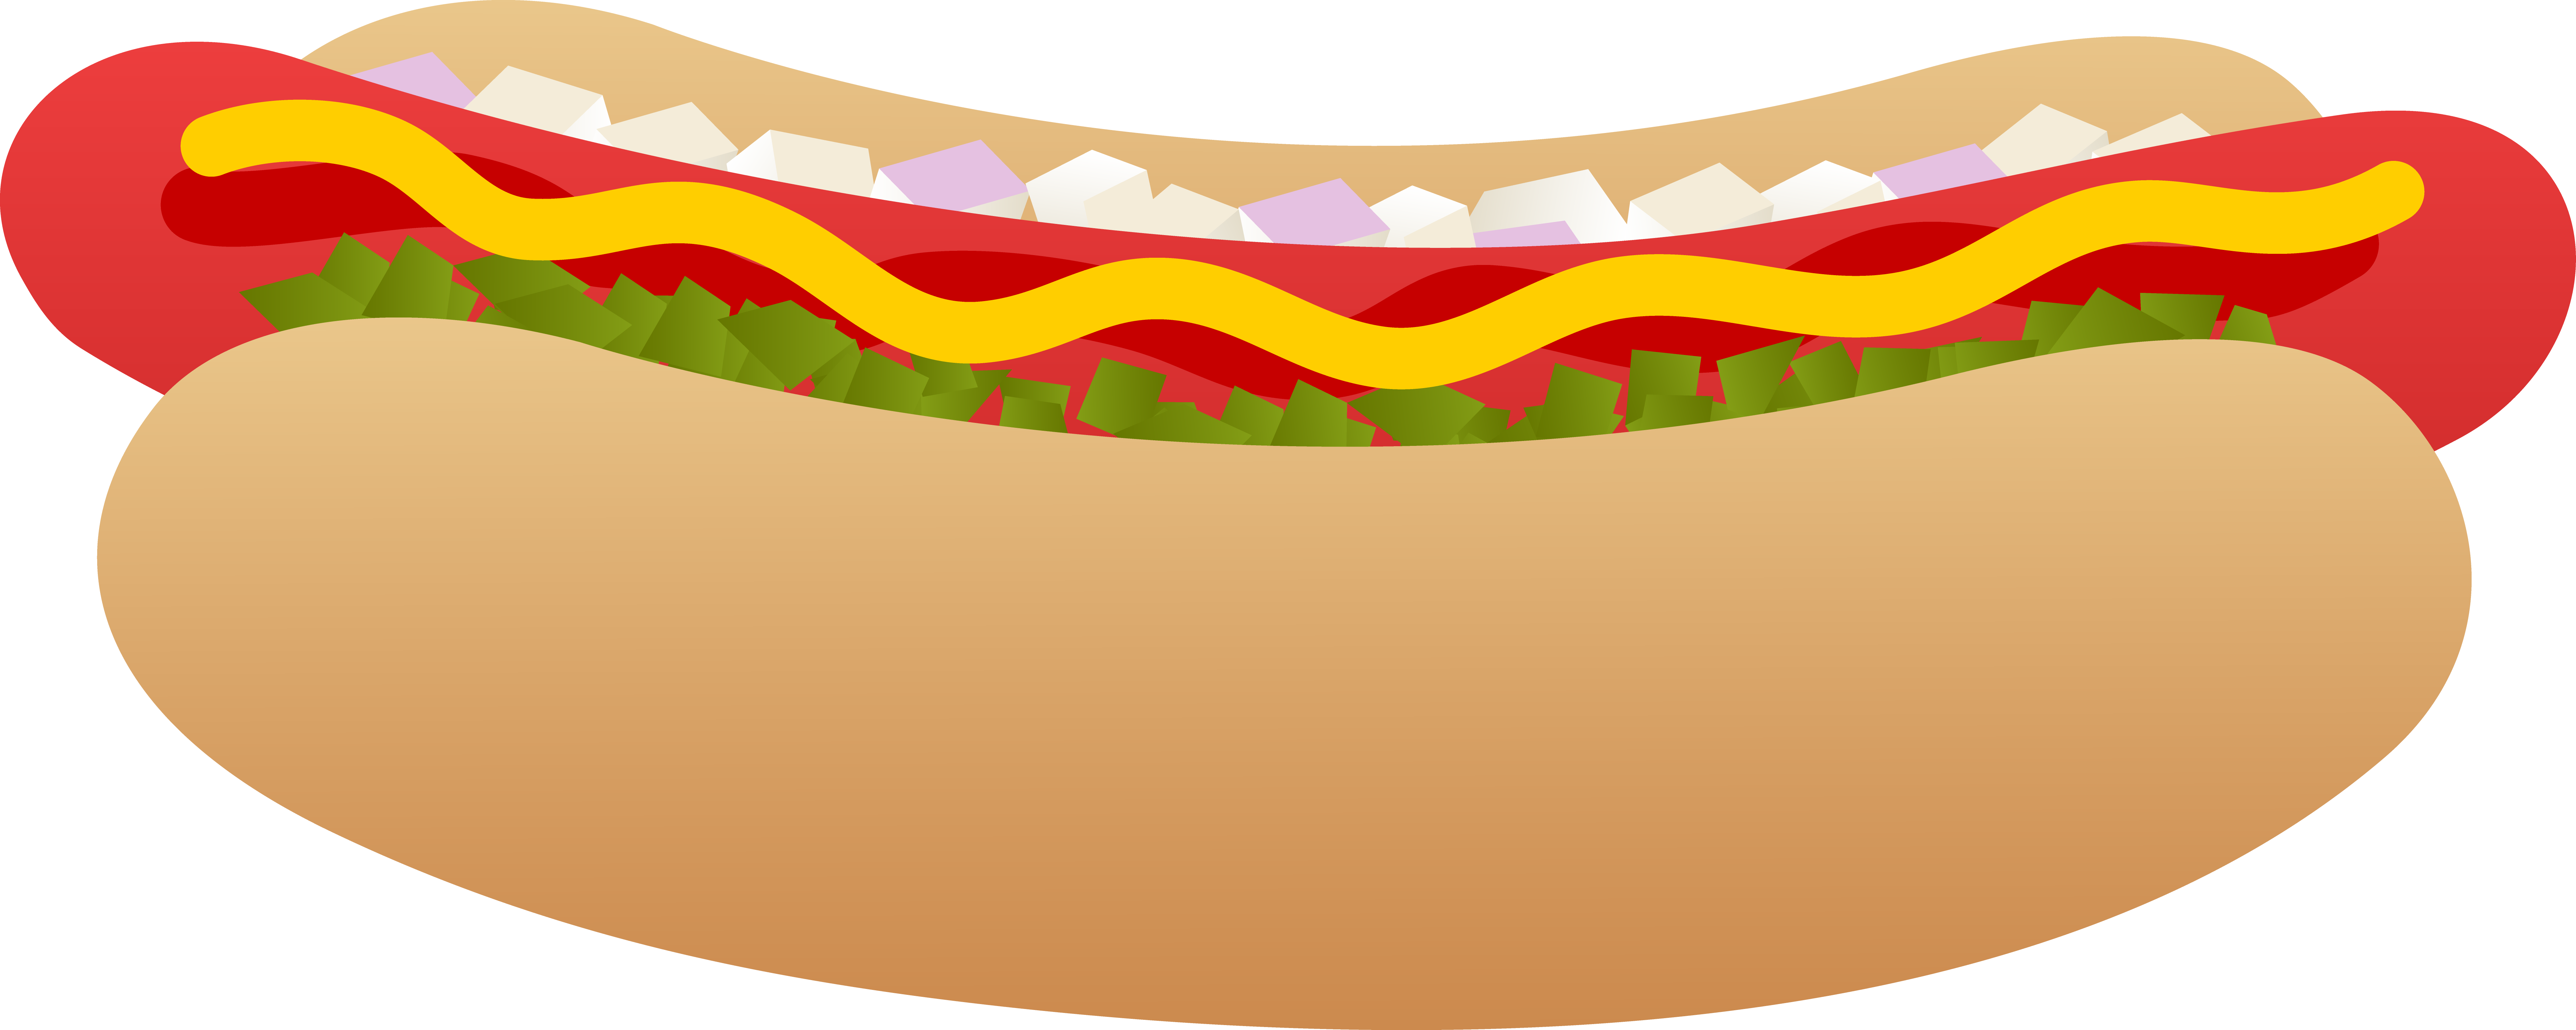 Animated hot dog clipart